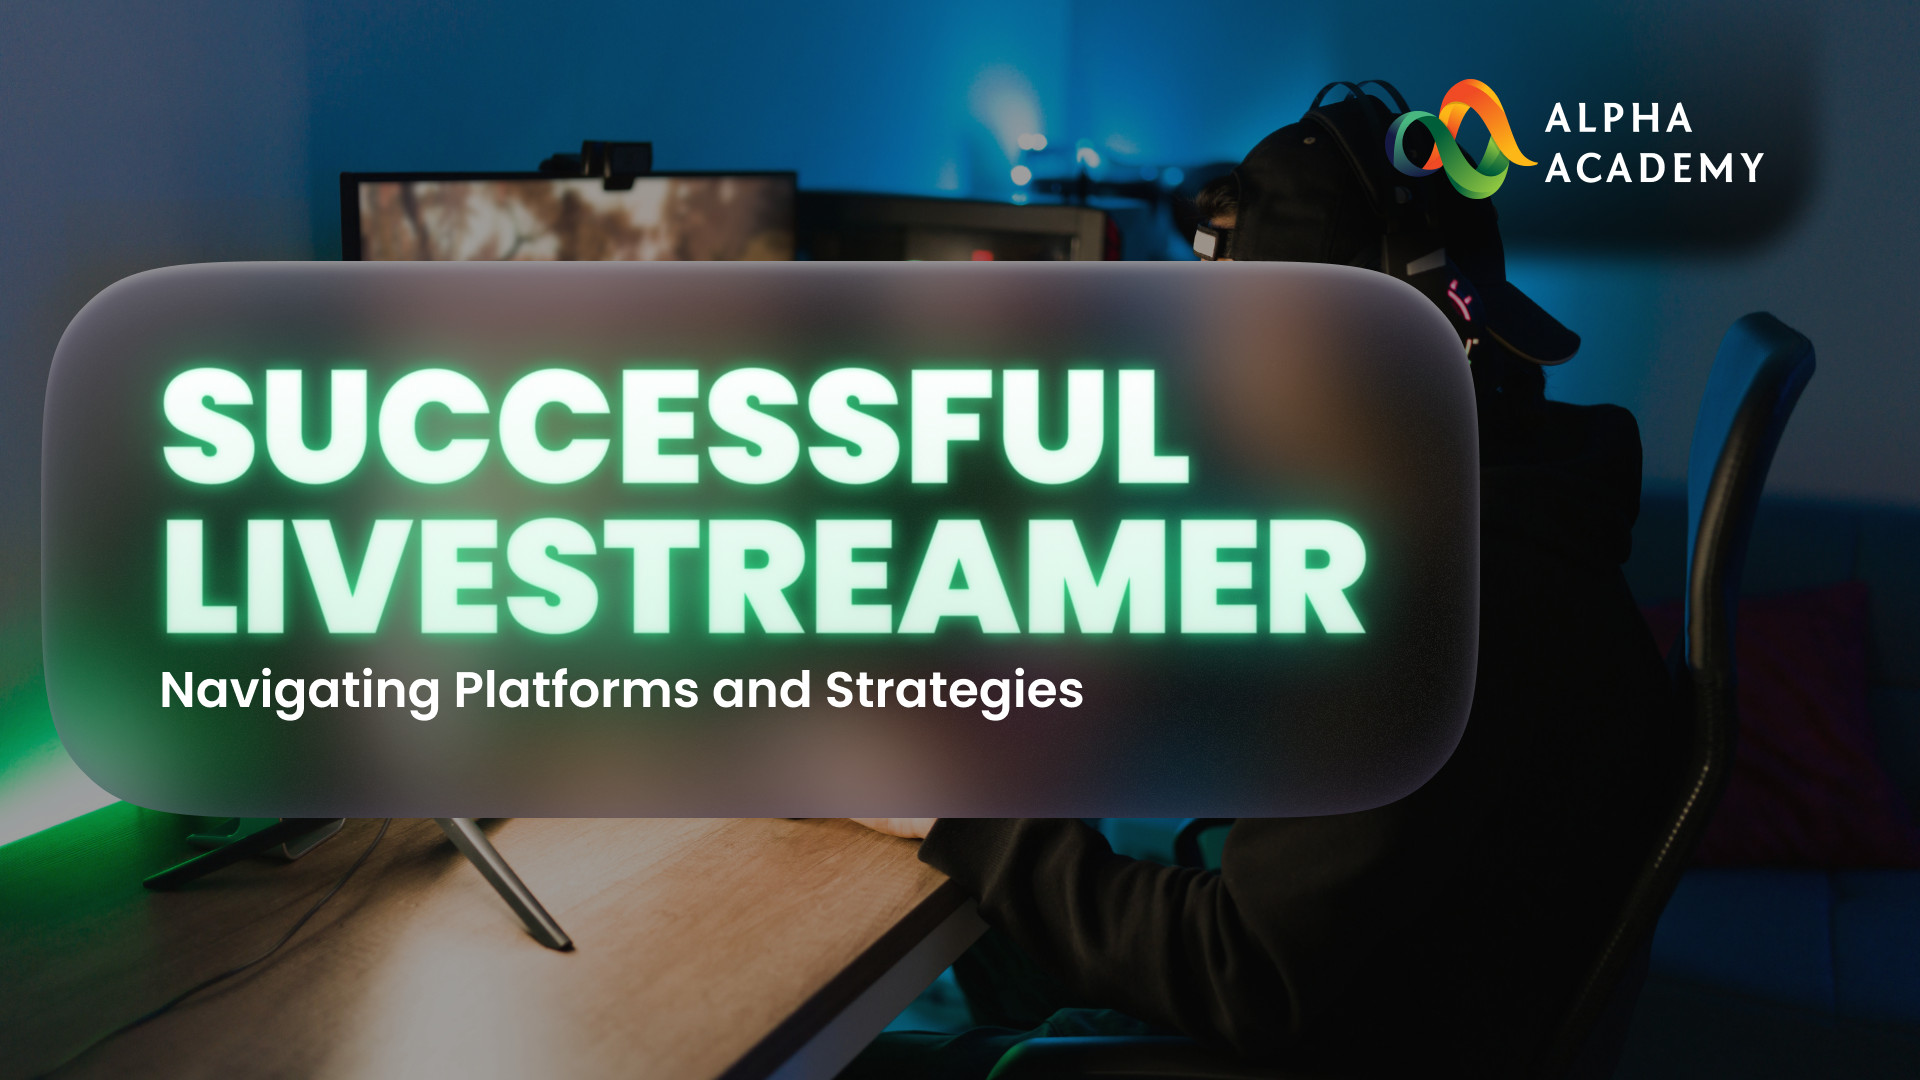 Successful Live streamer: Navigating Platforms and Strategies eLearning Bundle Alpha Academy Code, 11.28 usd